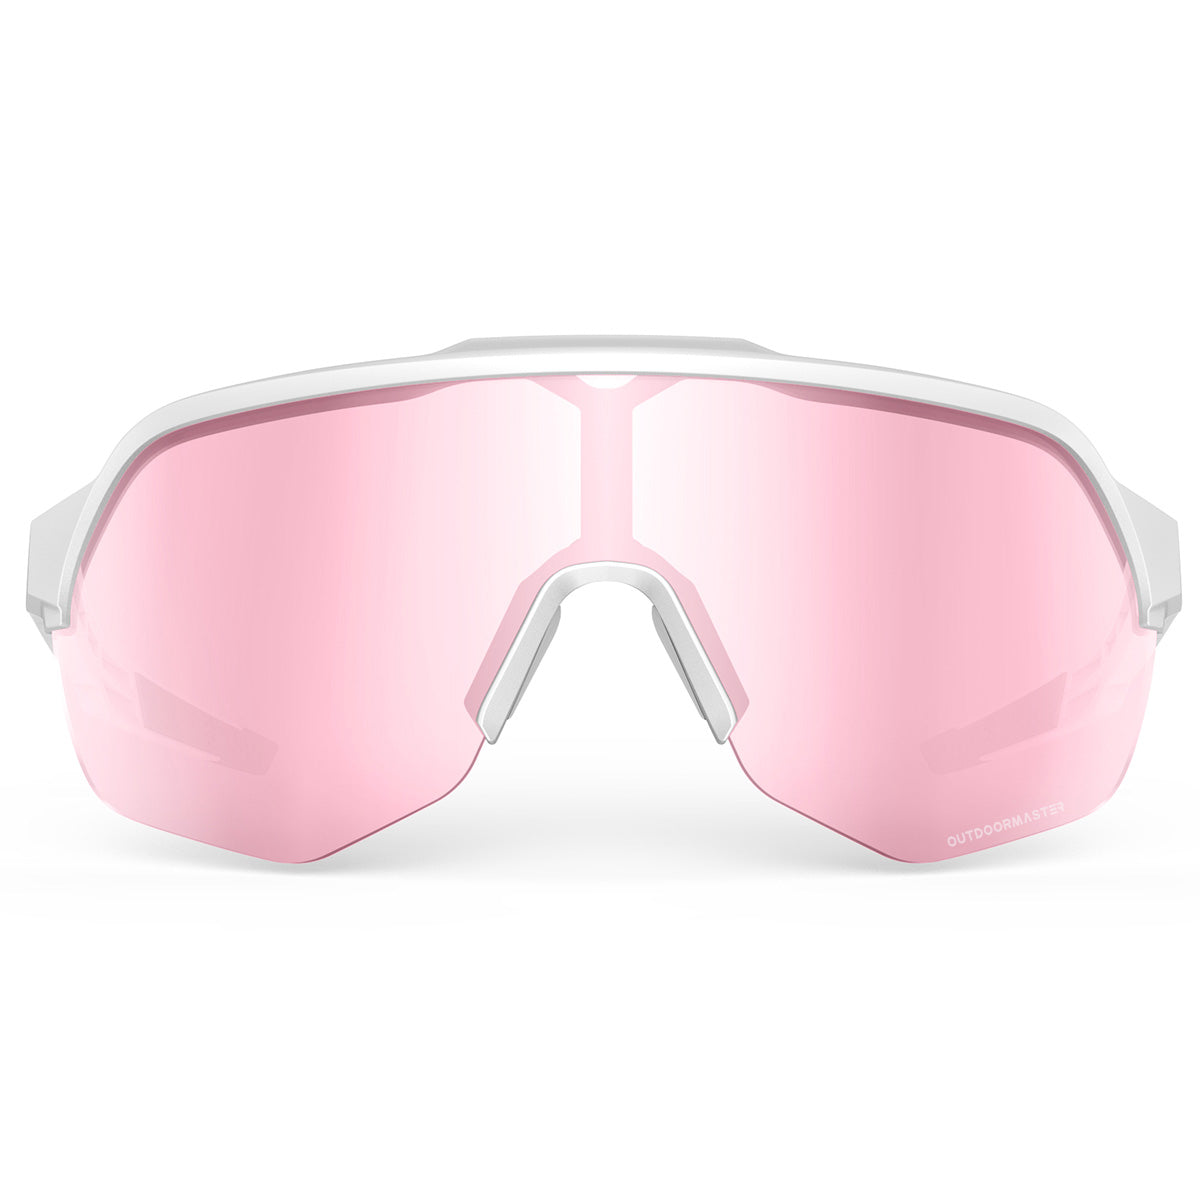 Hawk HD Enhance Sport Sunglasses